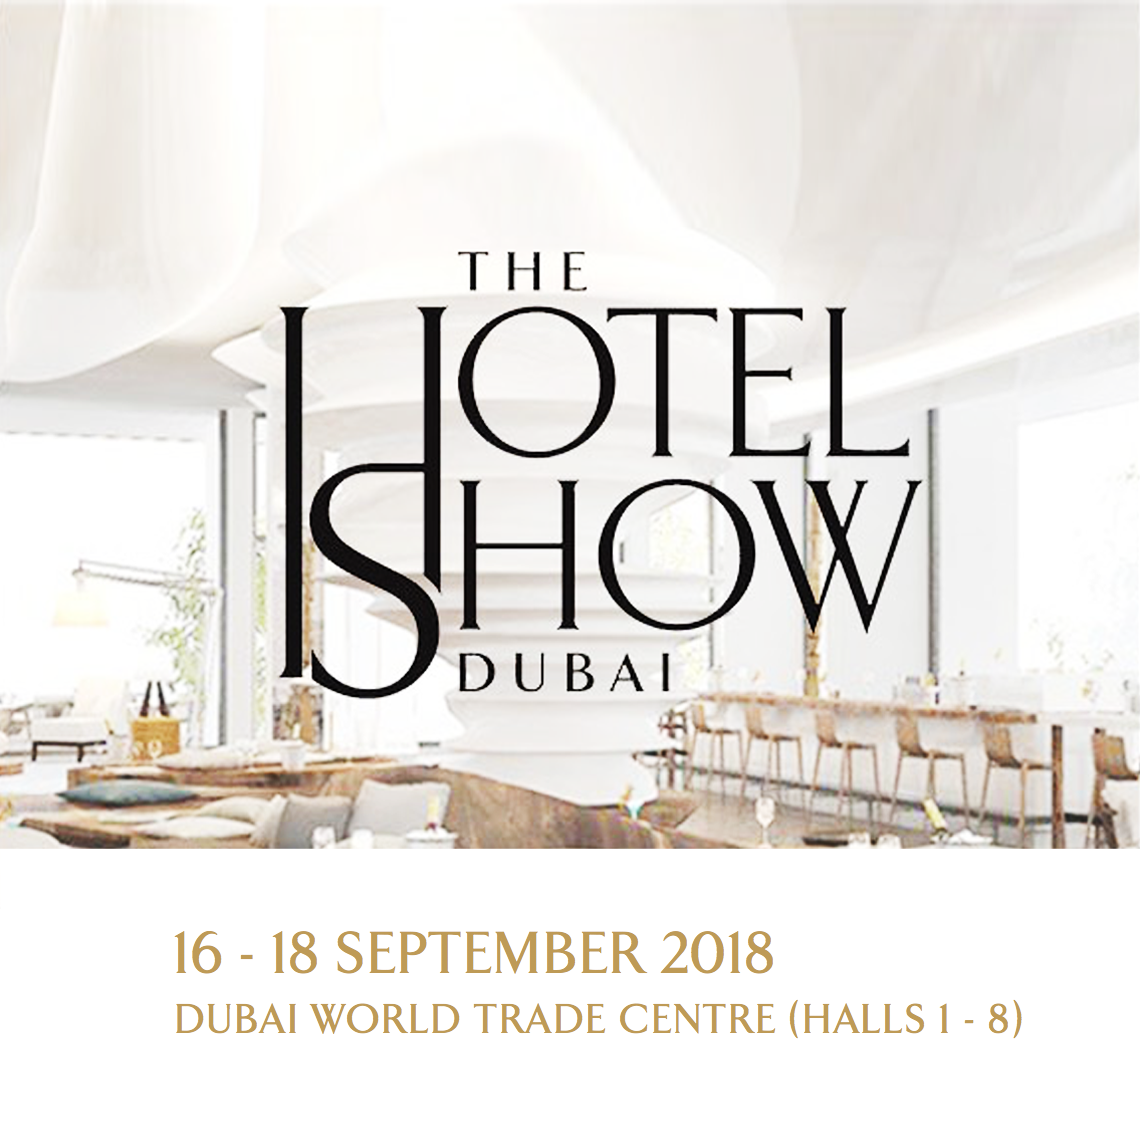 THE HOTEL SHOW DUBAI